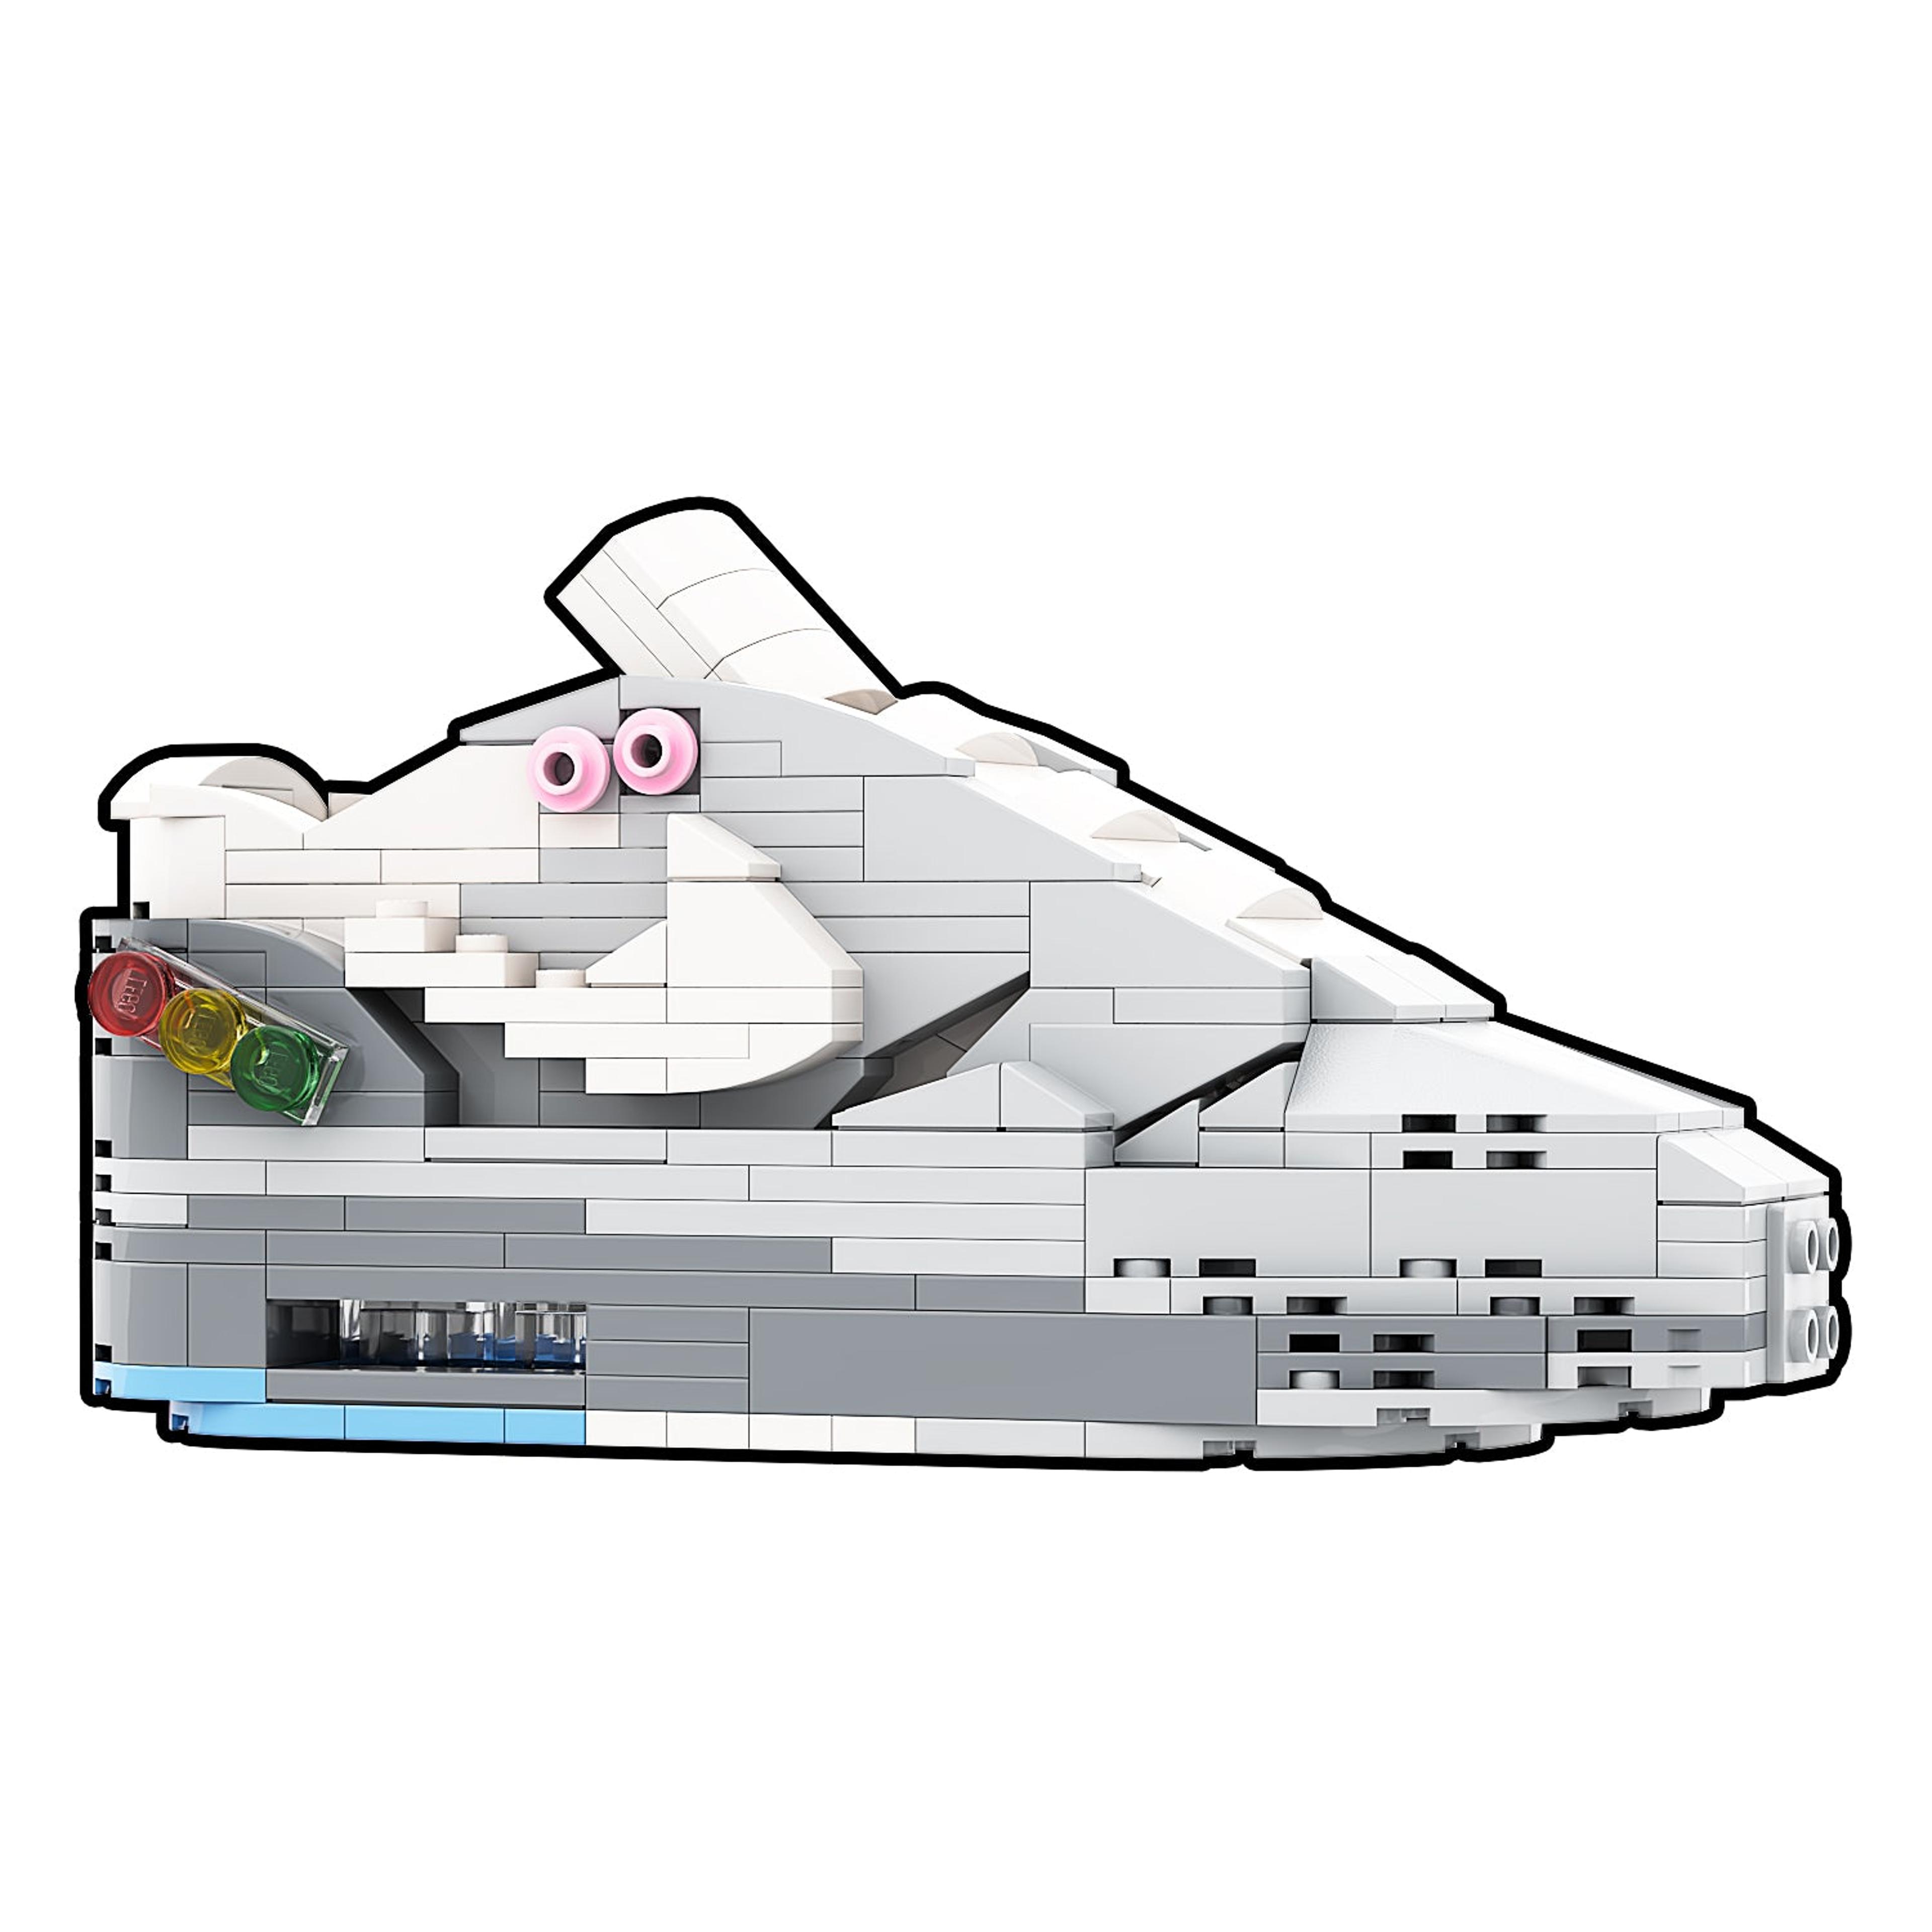 Alternate View 15 of REGULAR Air Max 1 "Mags MOC" Sneaker Bricks with Mini Figure